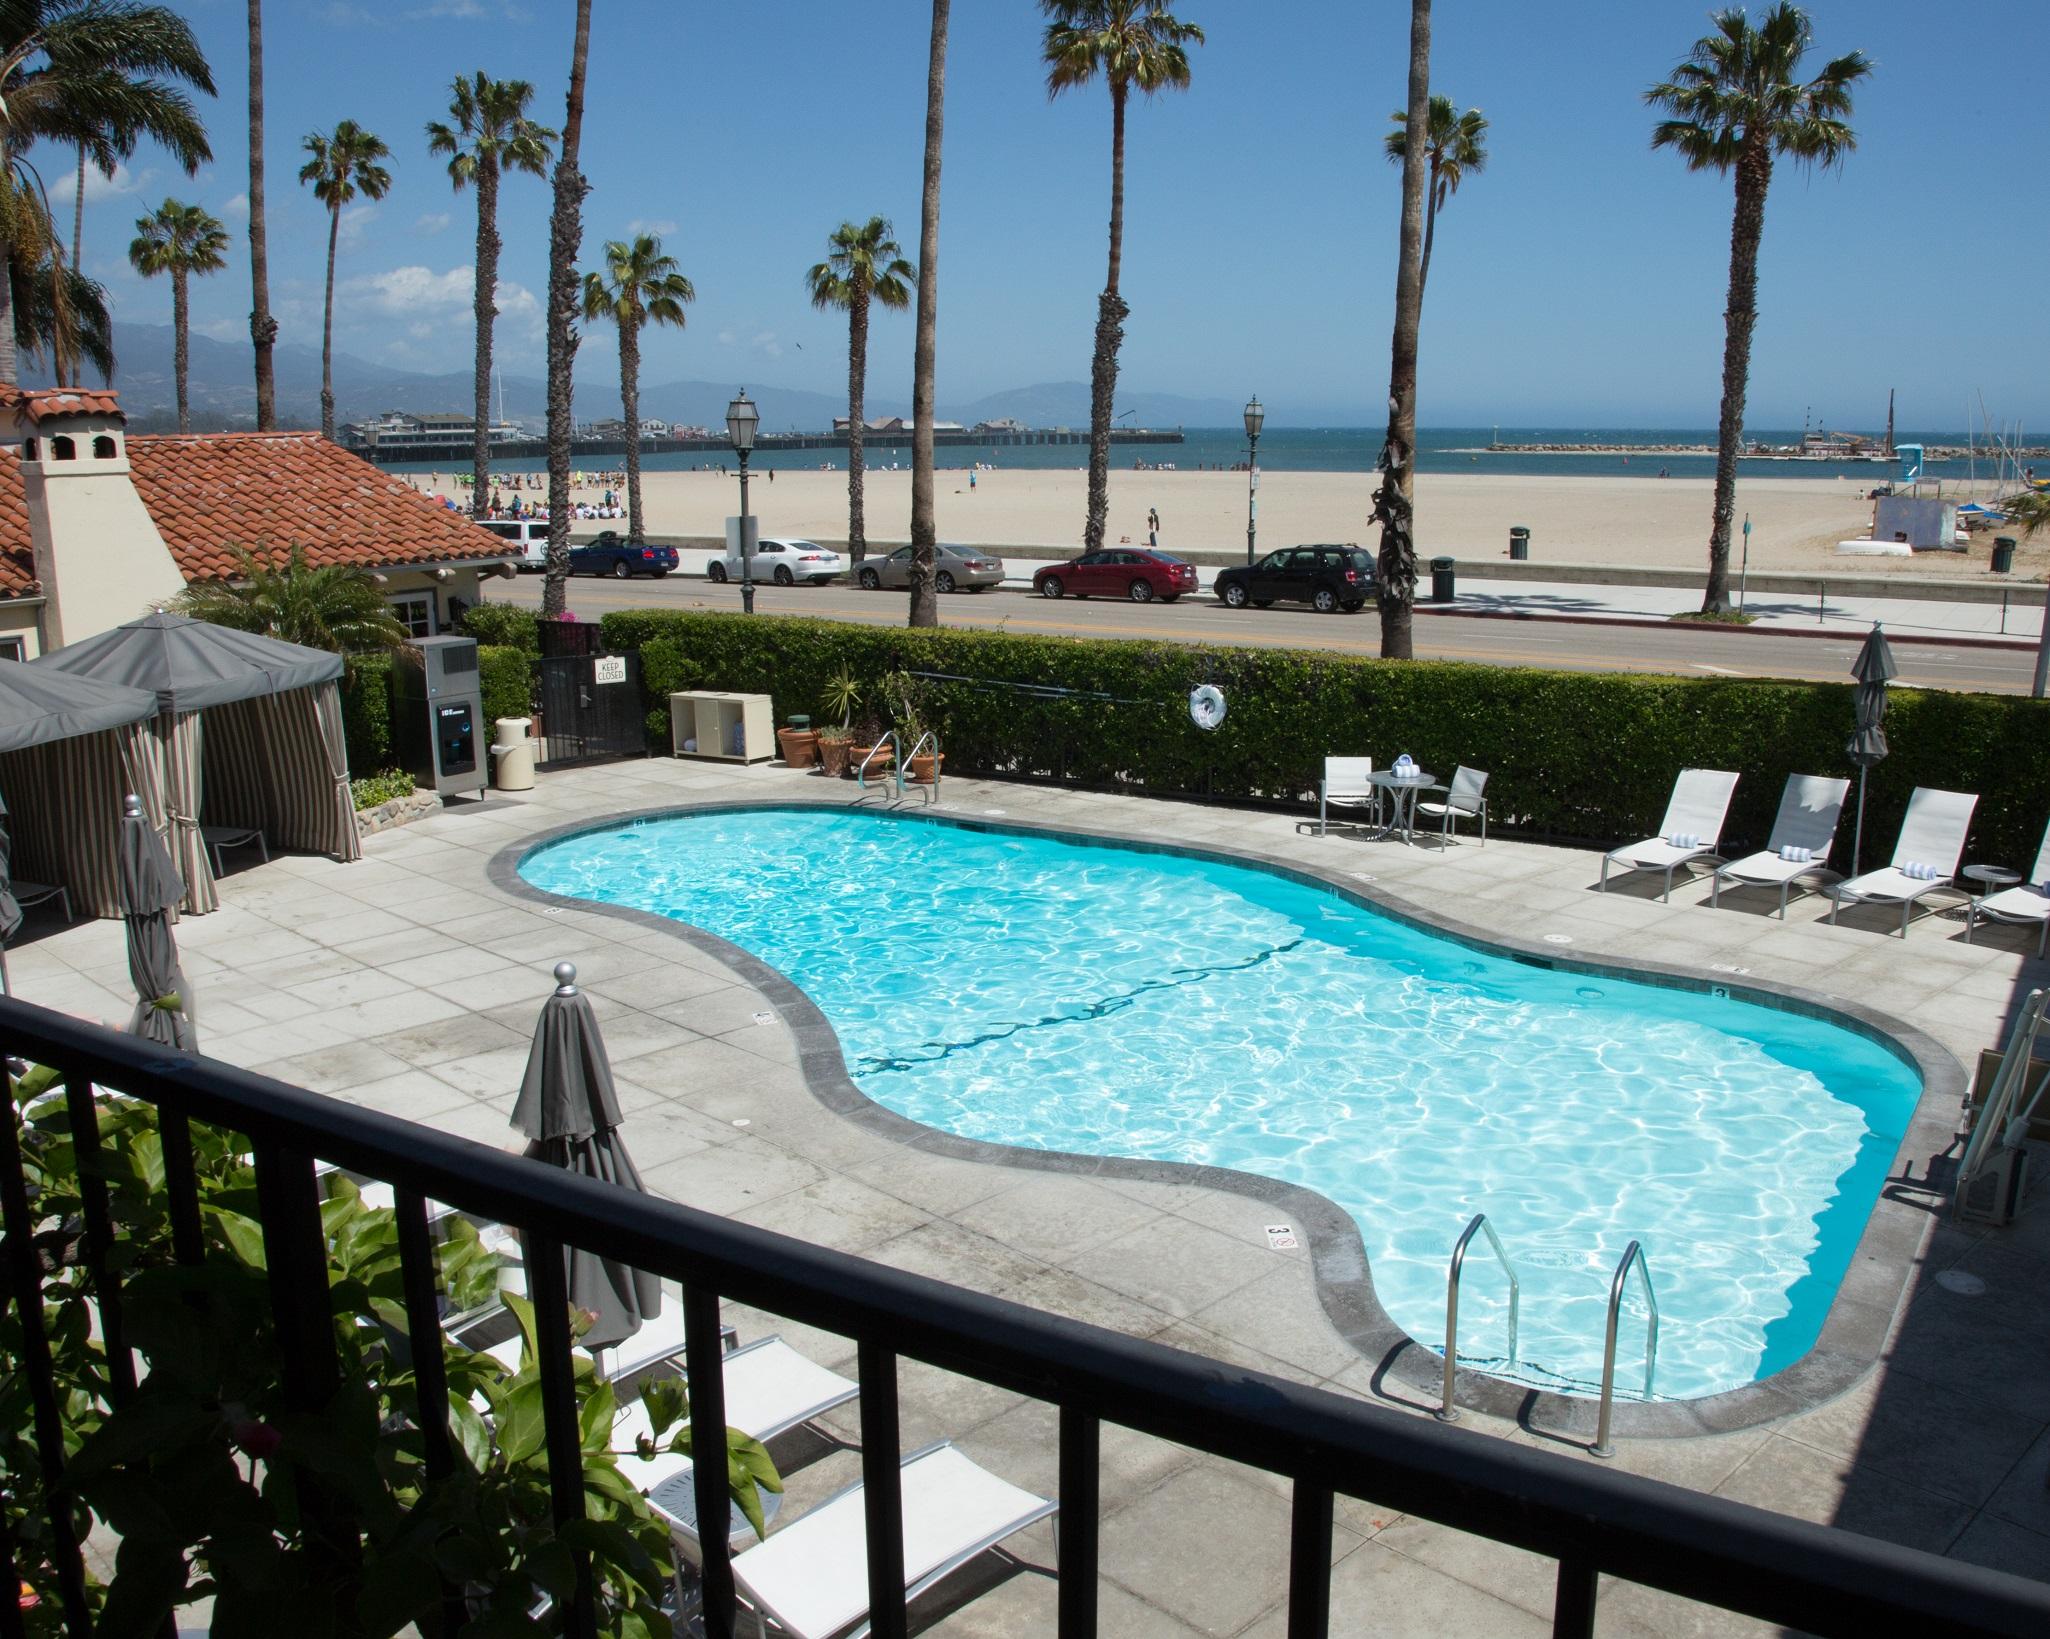 Hotel Milo Santa Barbara Exterior photo